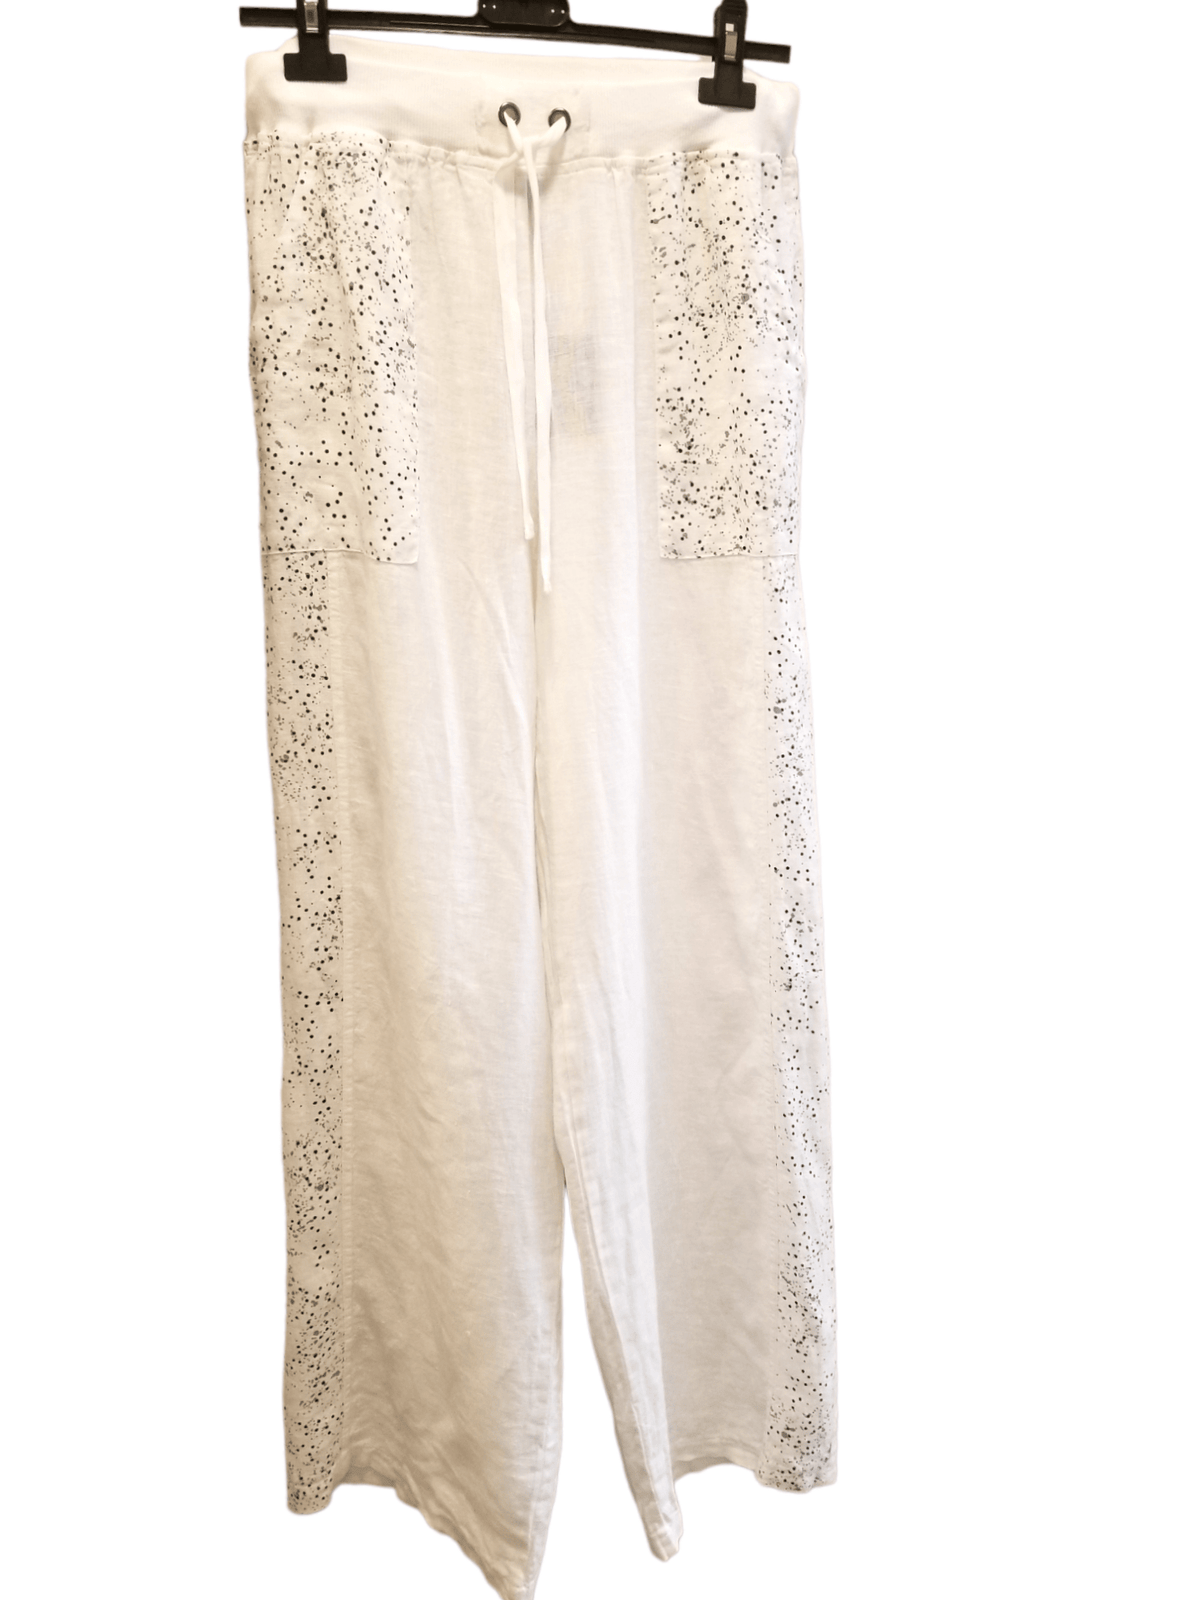 Inizio Women&#39;s Pants White bkgd black dots / S Linen Pants from Inizio - Dots